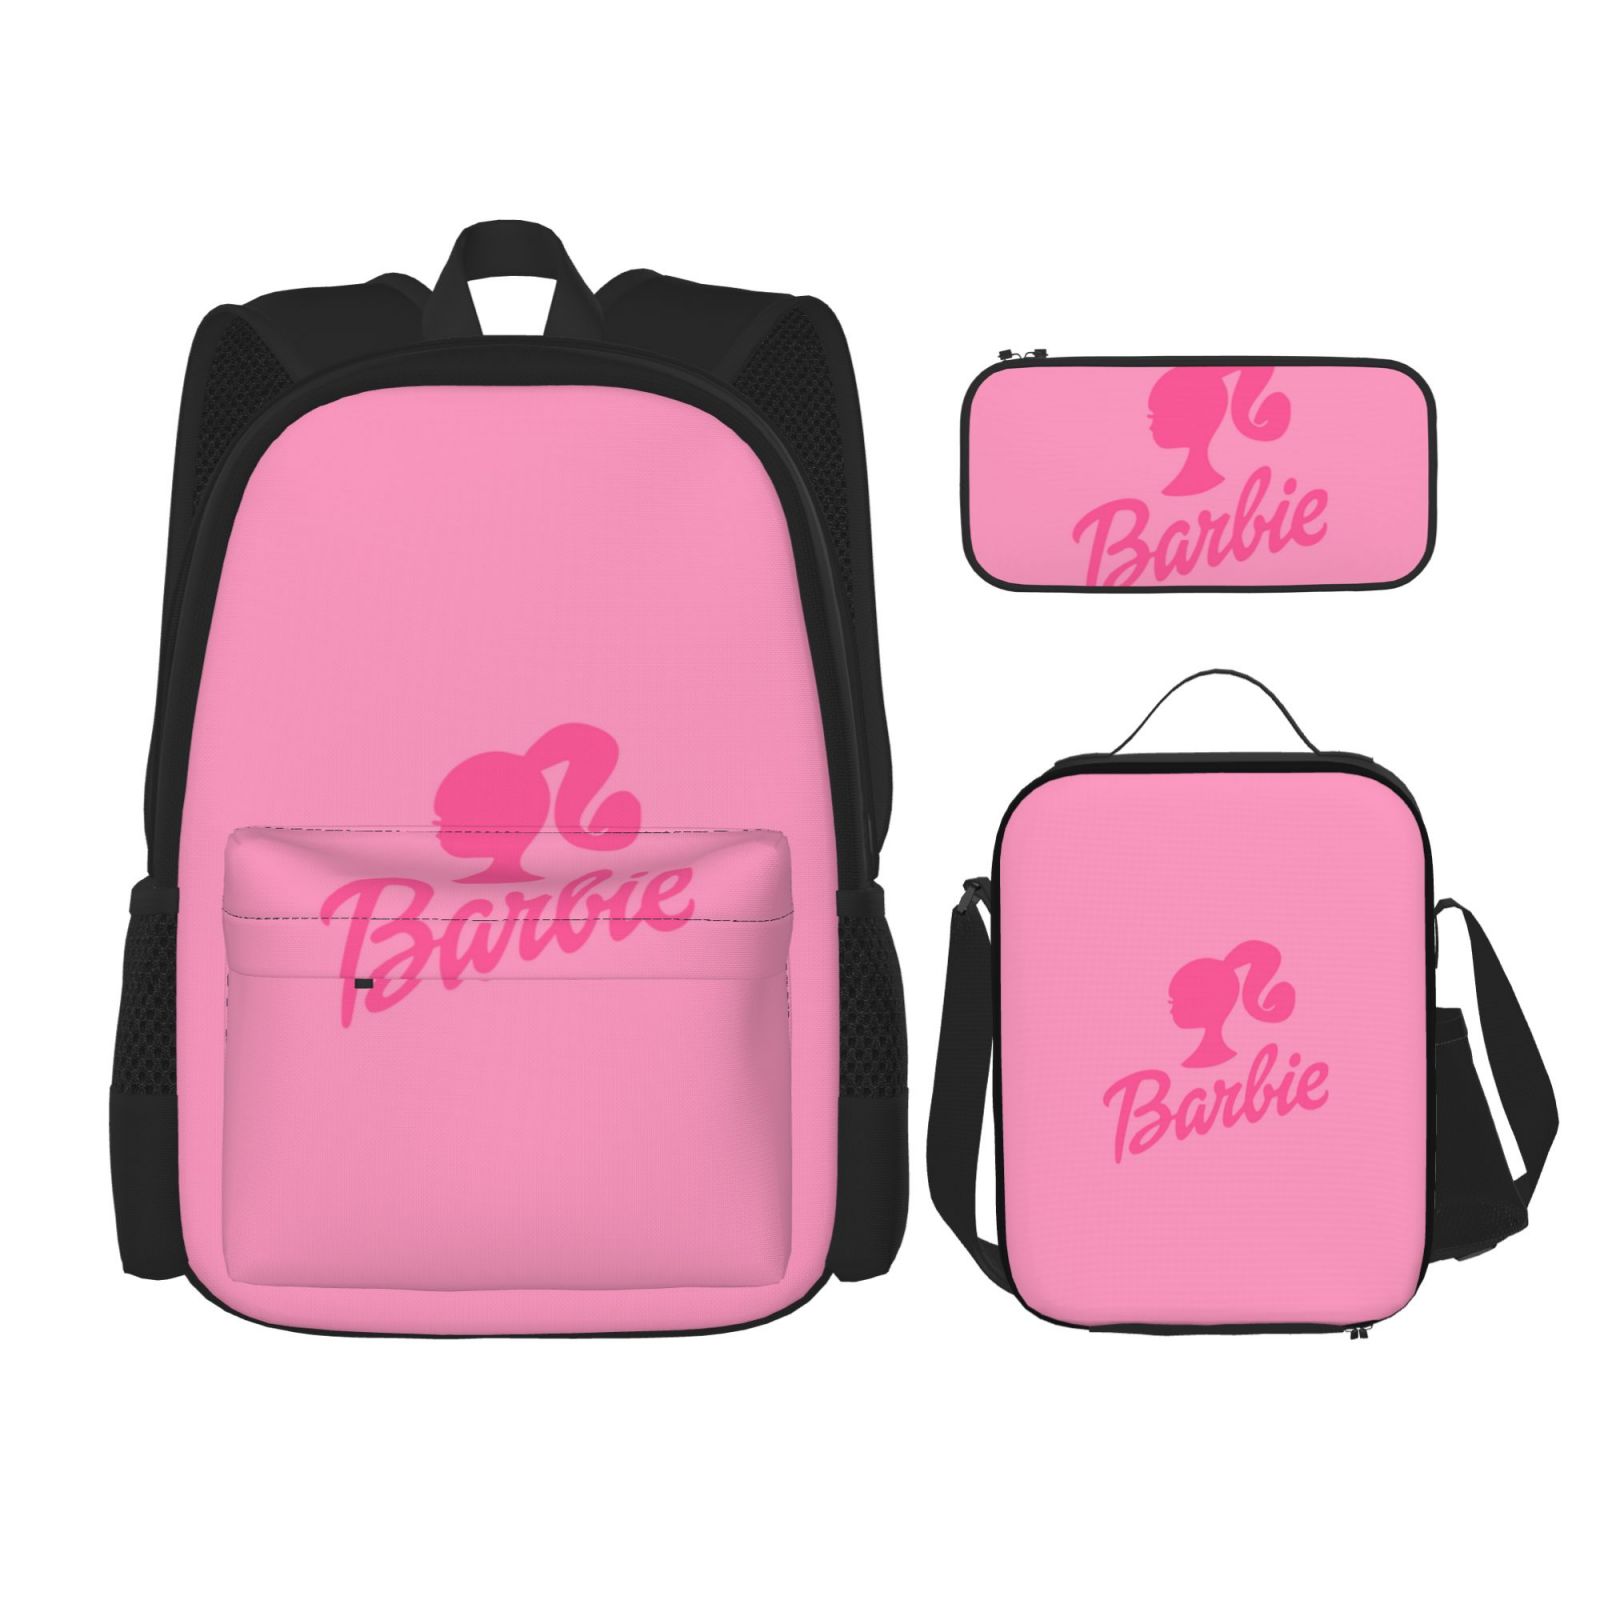 Barbie School Backpack Factory Sale - www.edoc.com.vn 1694581312